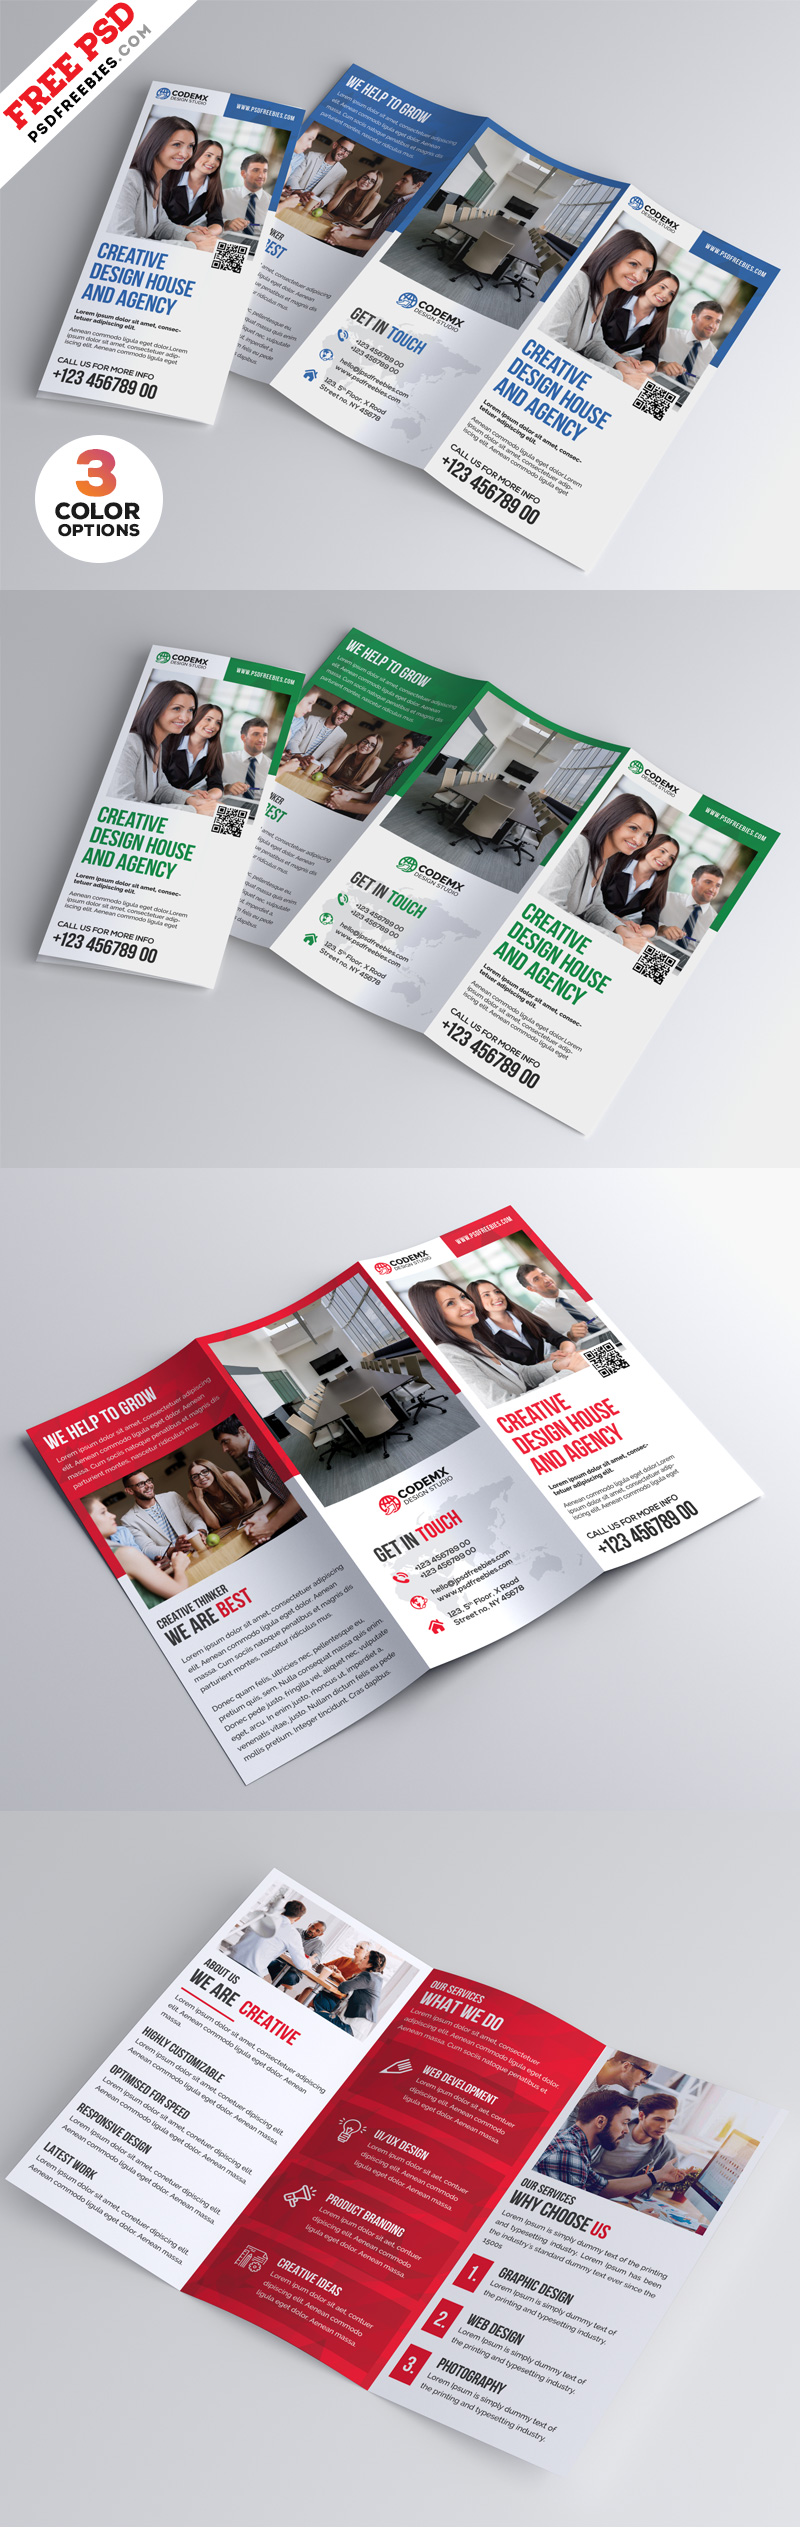 Professional A4 Tri-fold Brochure PSD Free Download